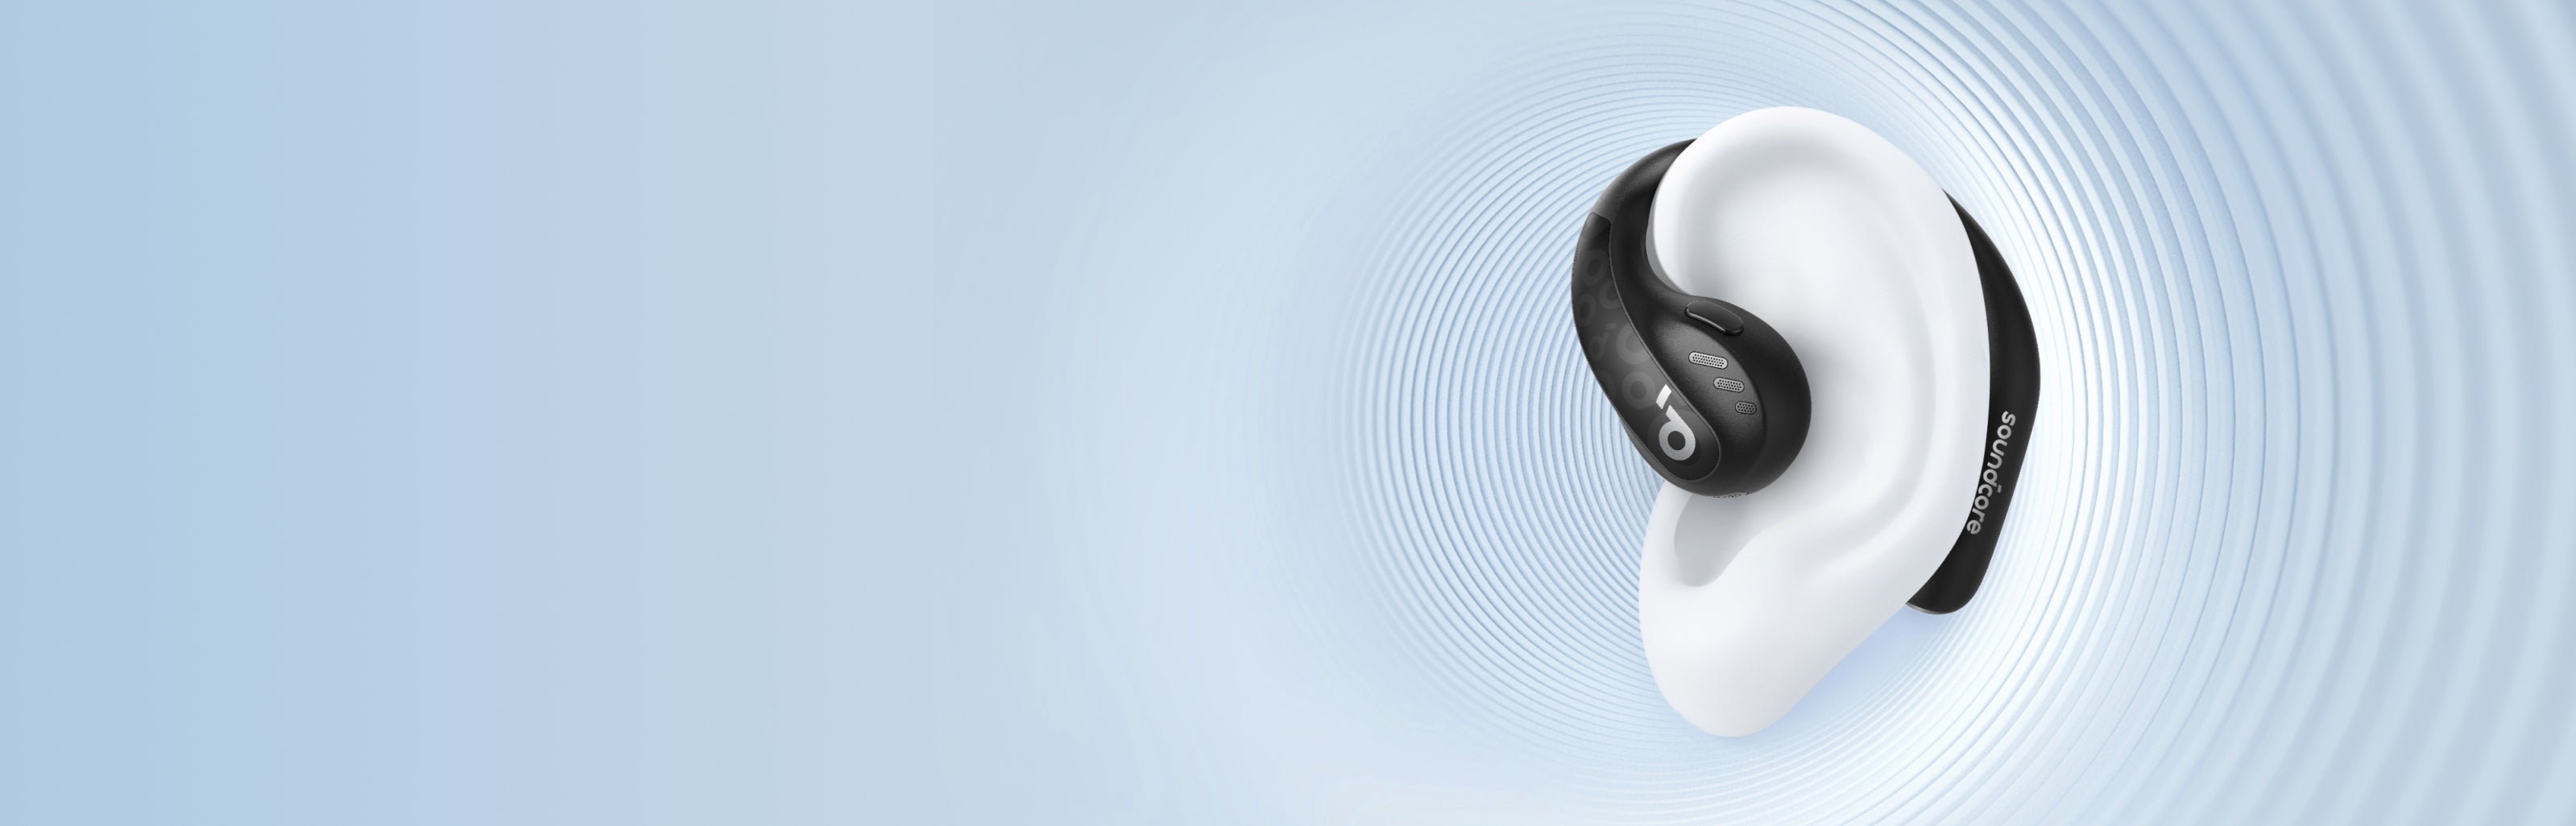 Sony LinkBuds S Review - Versatile Wireless Earphones for every usage  scenario - The Tech Revolutionist